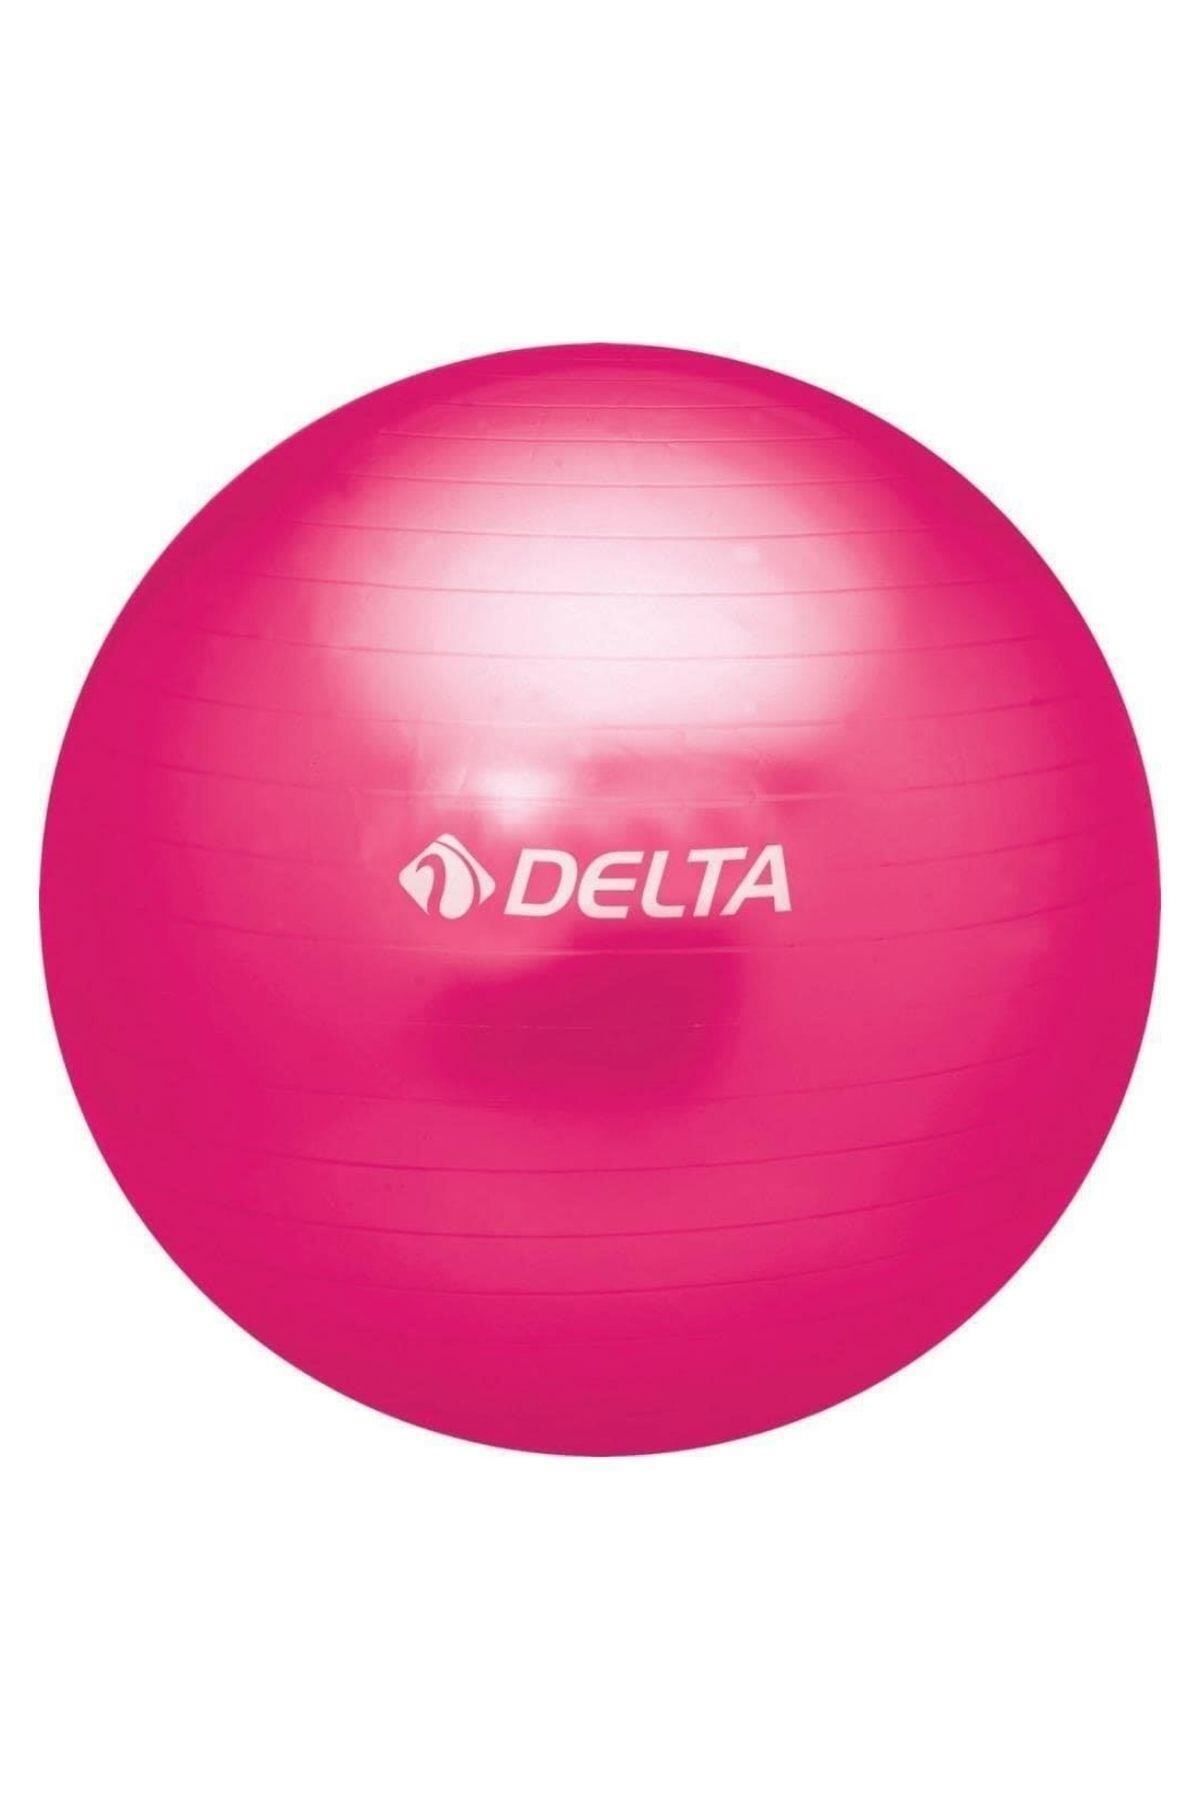 Delta 65 cm Dura-Strong Deluxe Fuşya Pilates Topu (Pompasız)